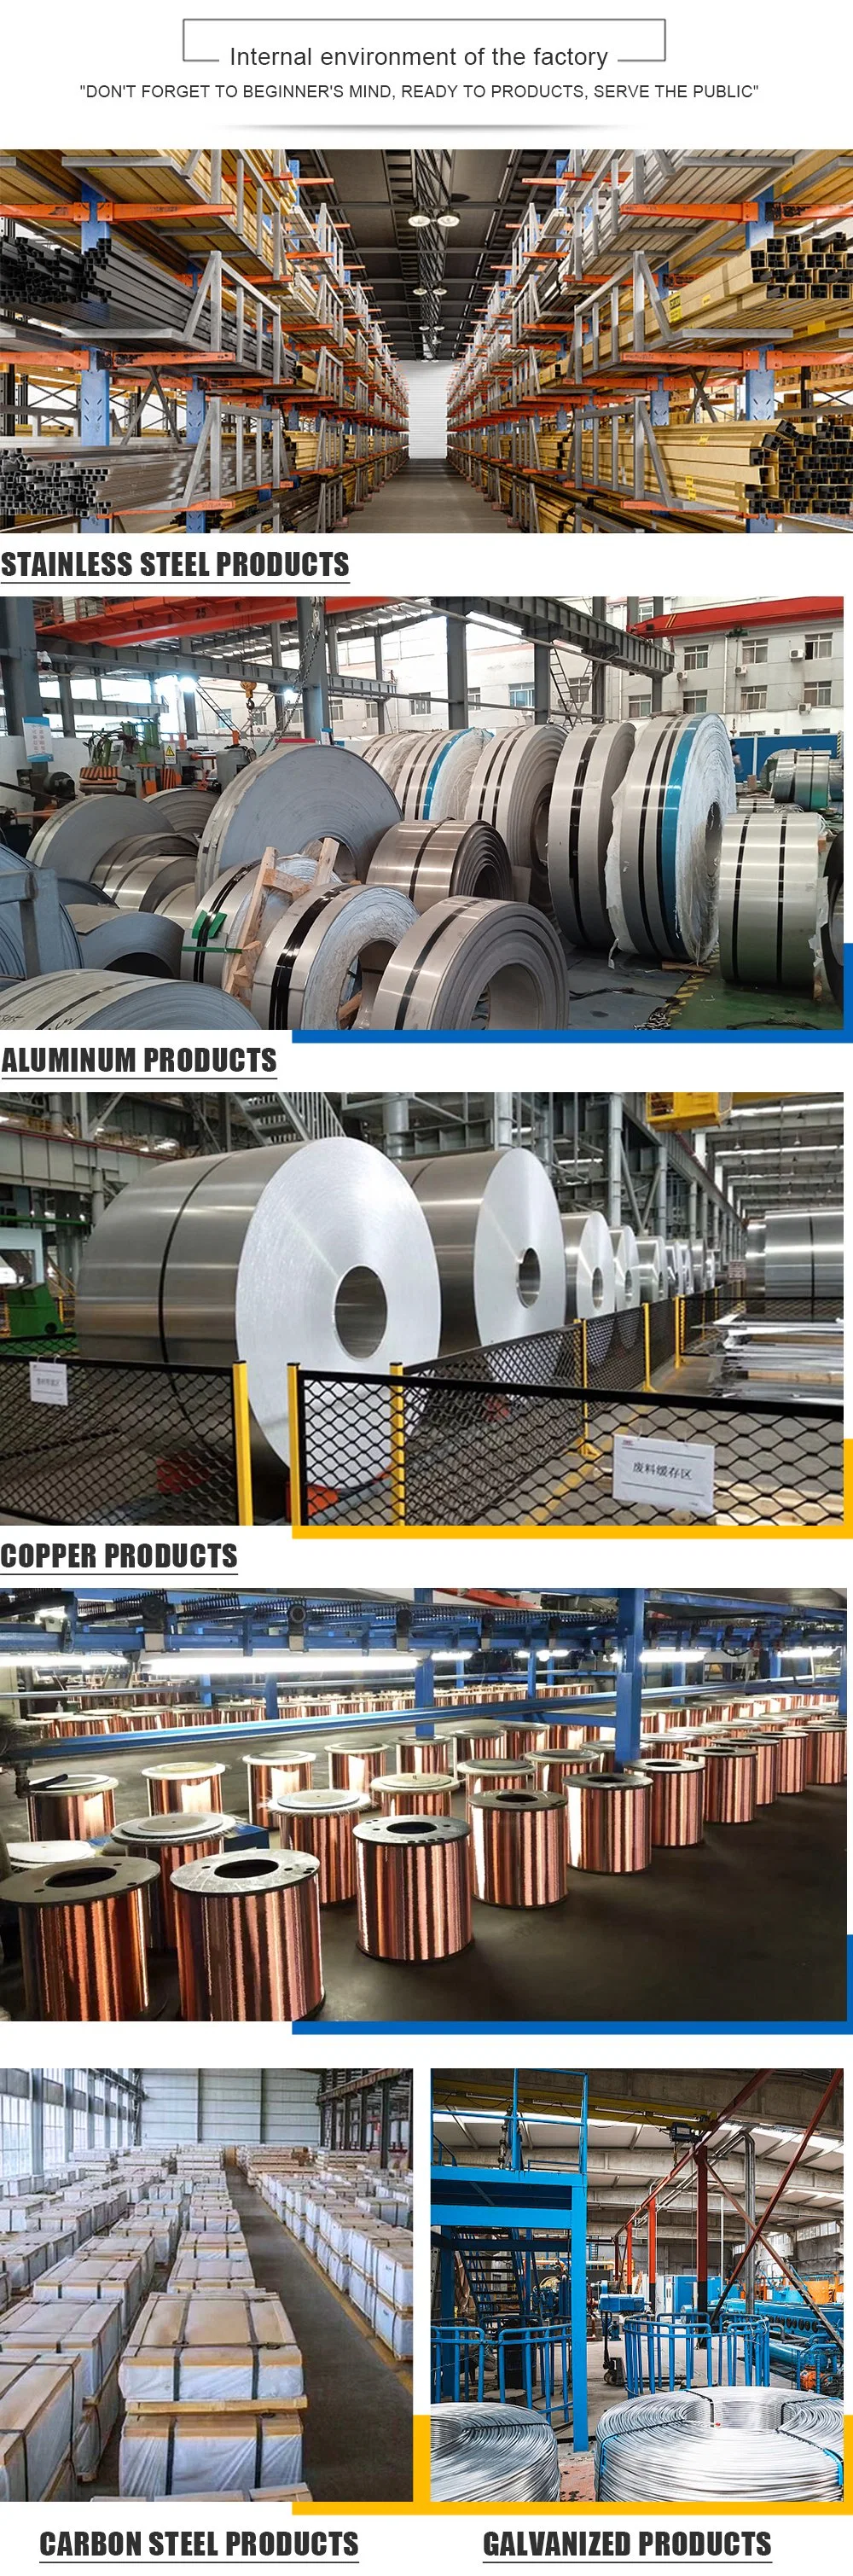 China Supplier 6-600mm C45 1045 4140carbon Steel Rod Steel Bar Chrome Plated Mild Steel Round Bar Price